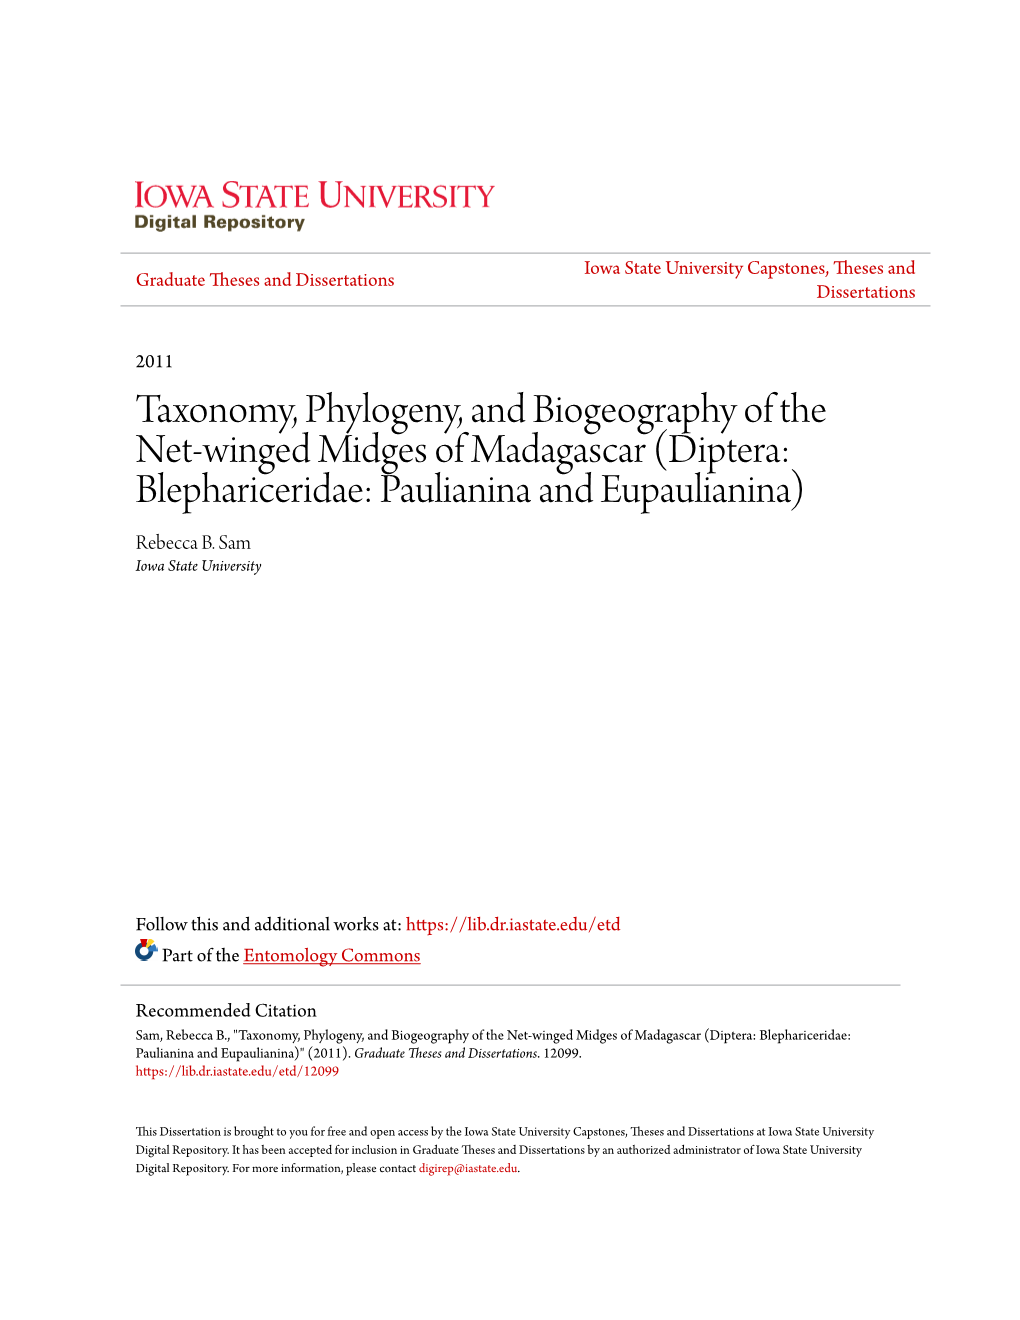 Taxonomy, Phylogeny, and Biogeography of the Net-Winged Midges of Madagascar (Diptera: Blephariceridae: Paulianina and Eupaulianina) Rebecca B